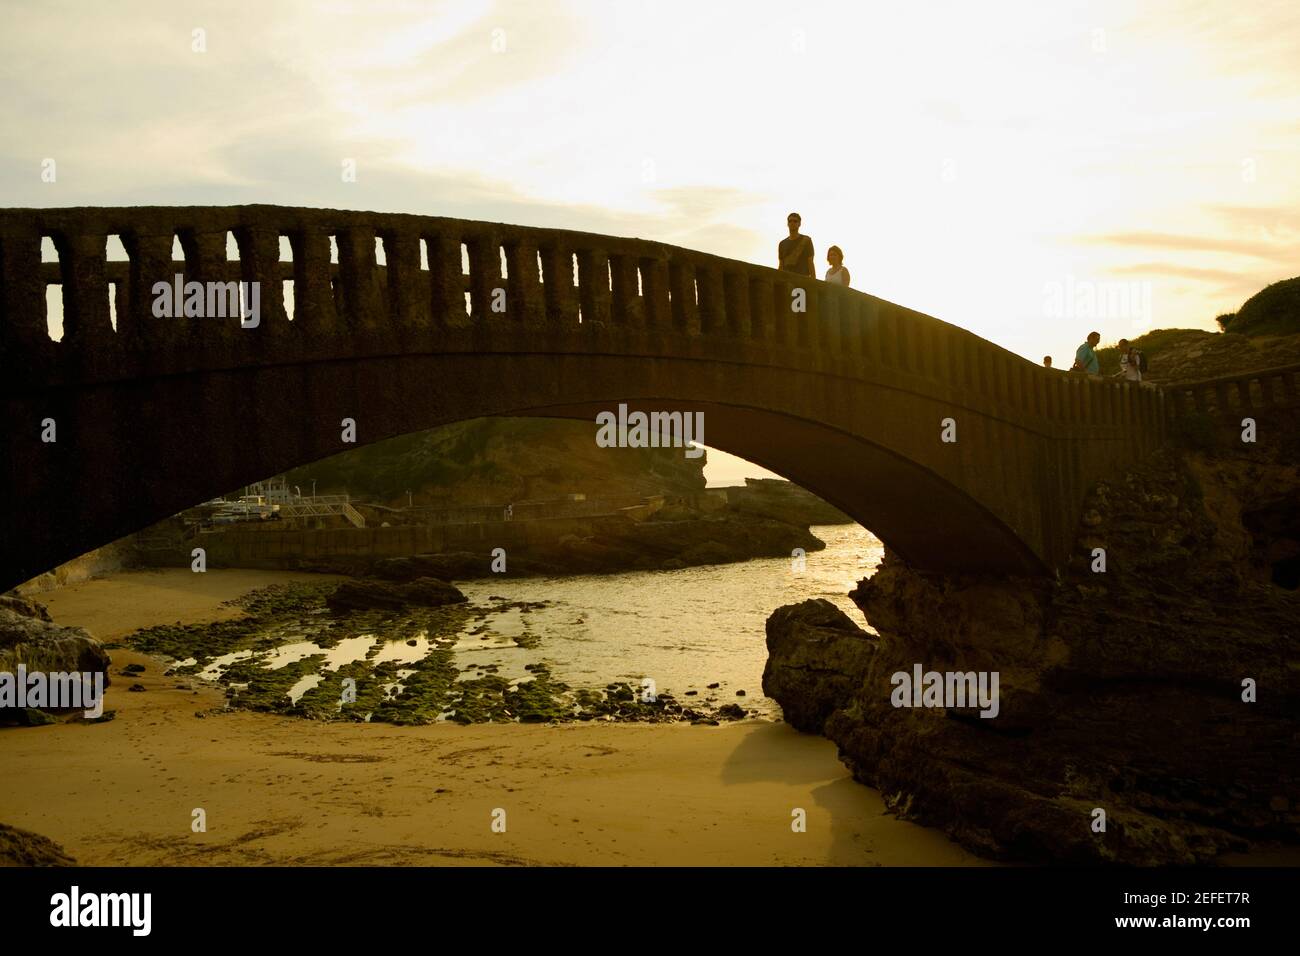 Tourists on the bridge over a beach, Port Des Pecheurs, Biarritz, France Stock Photo